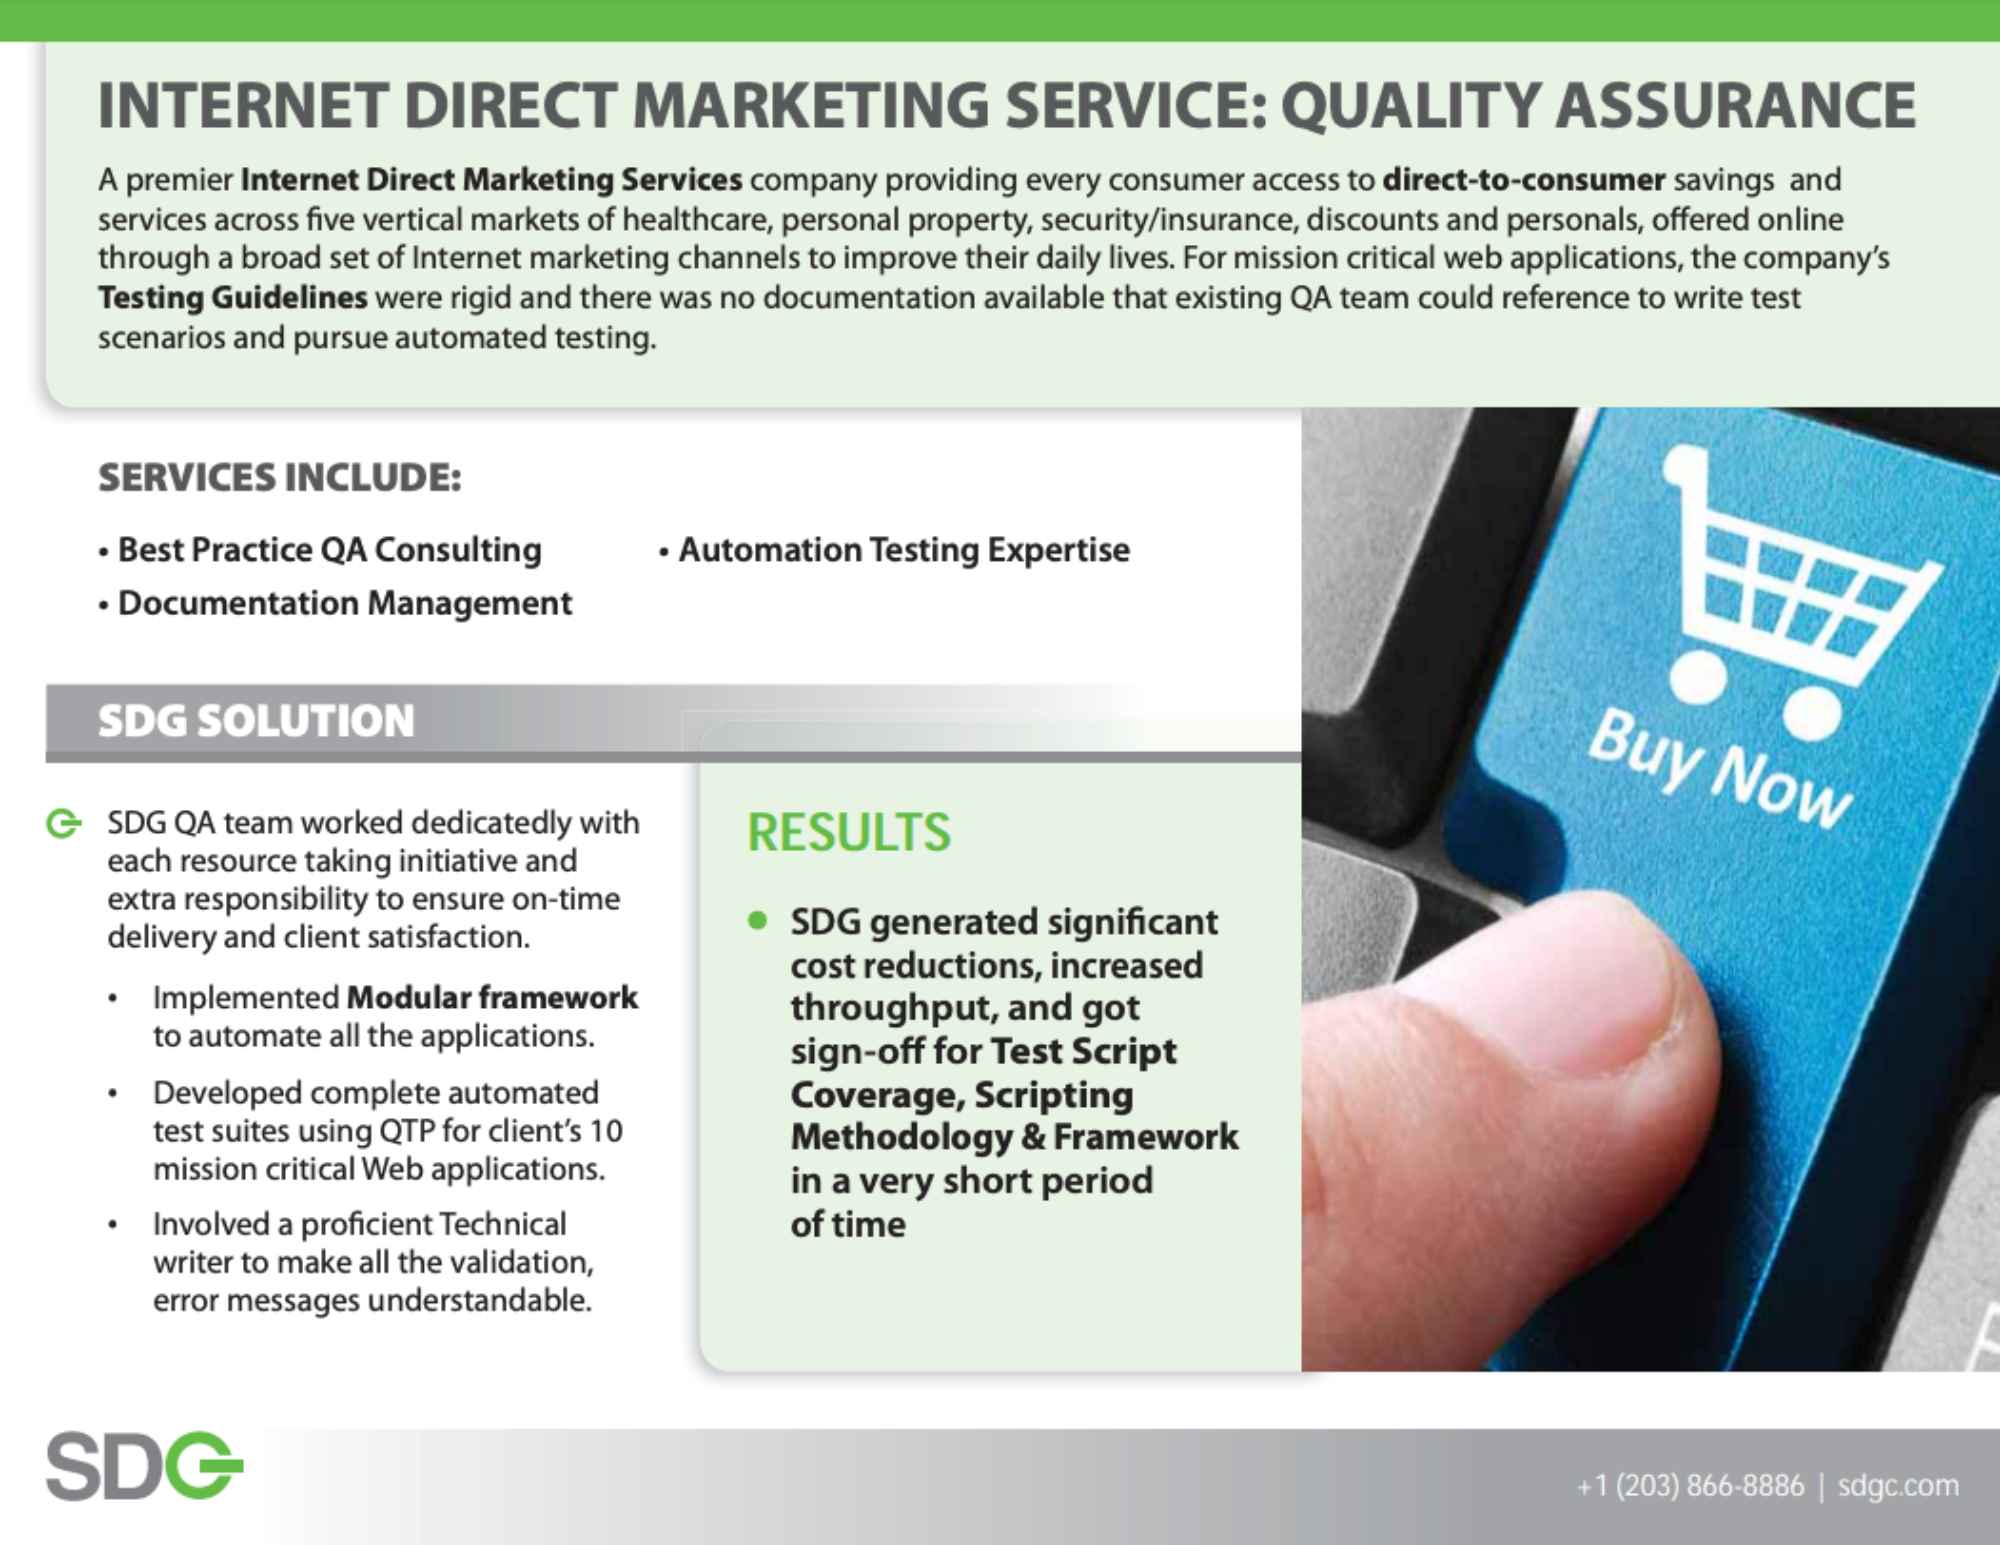 Internet Direct Marketing Case Study Image